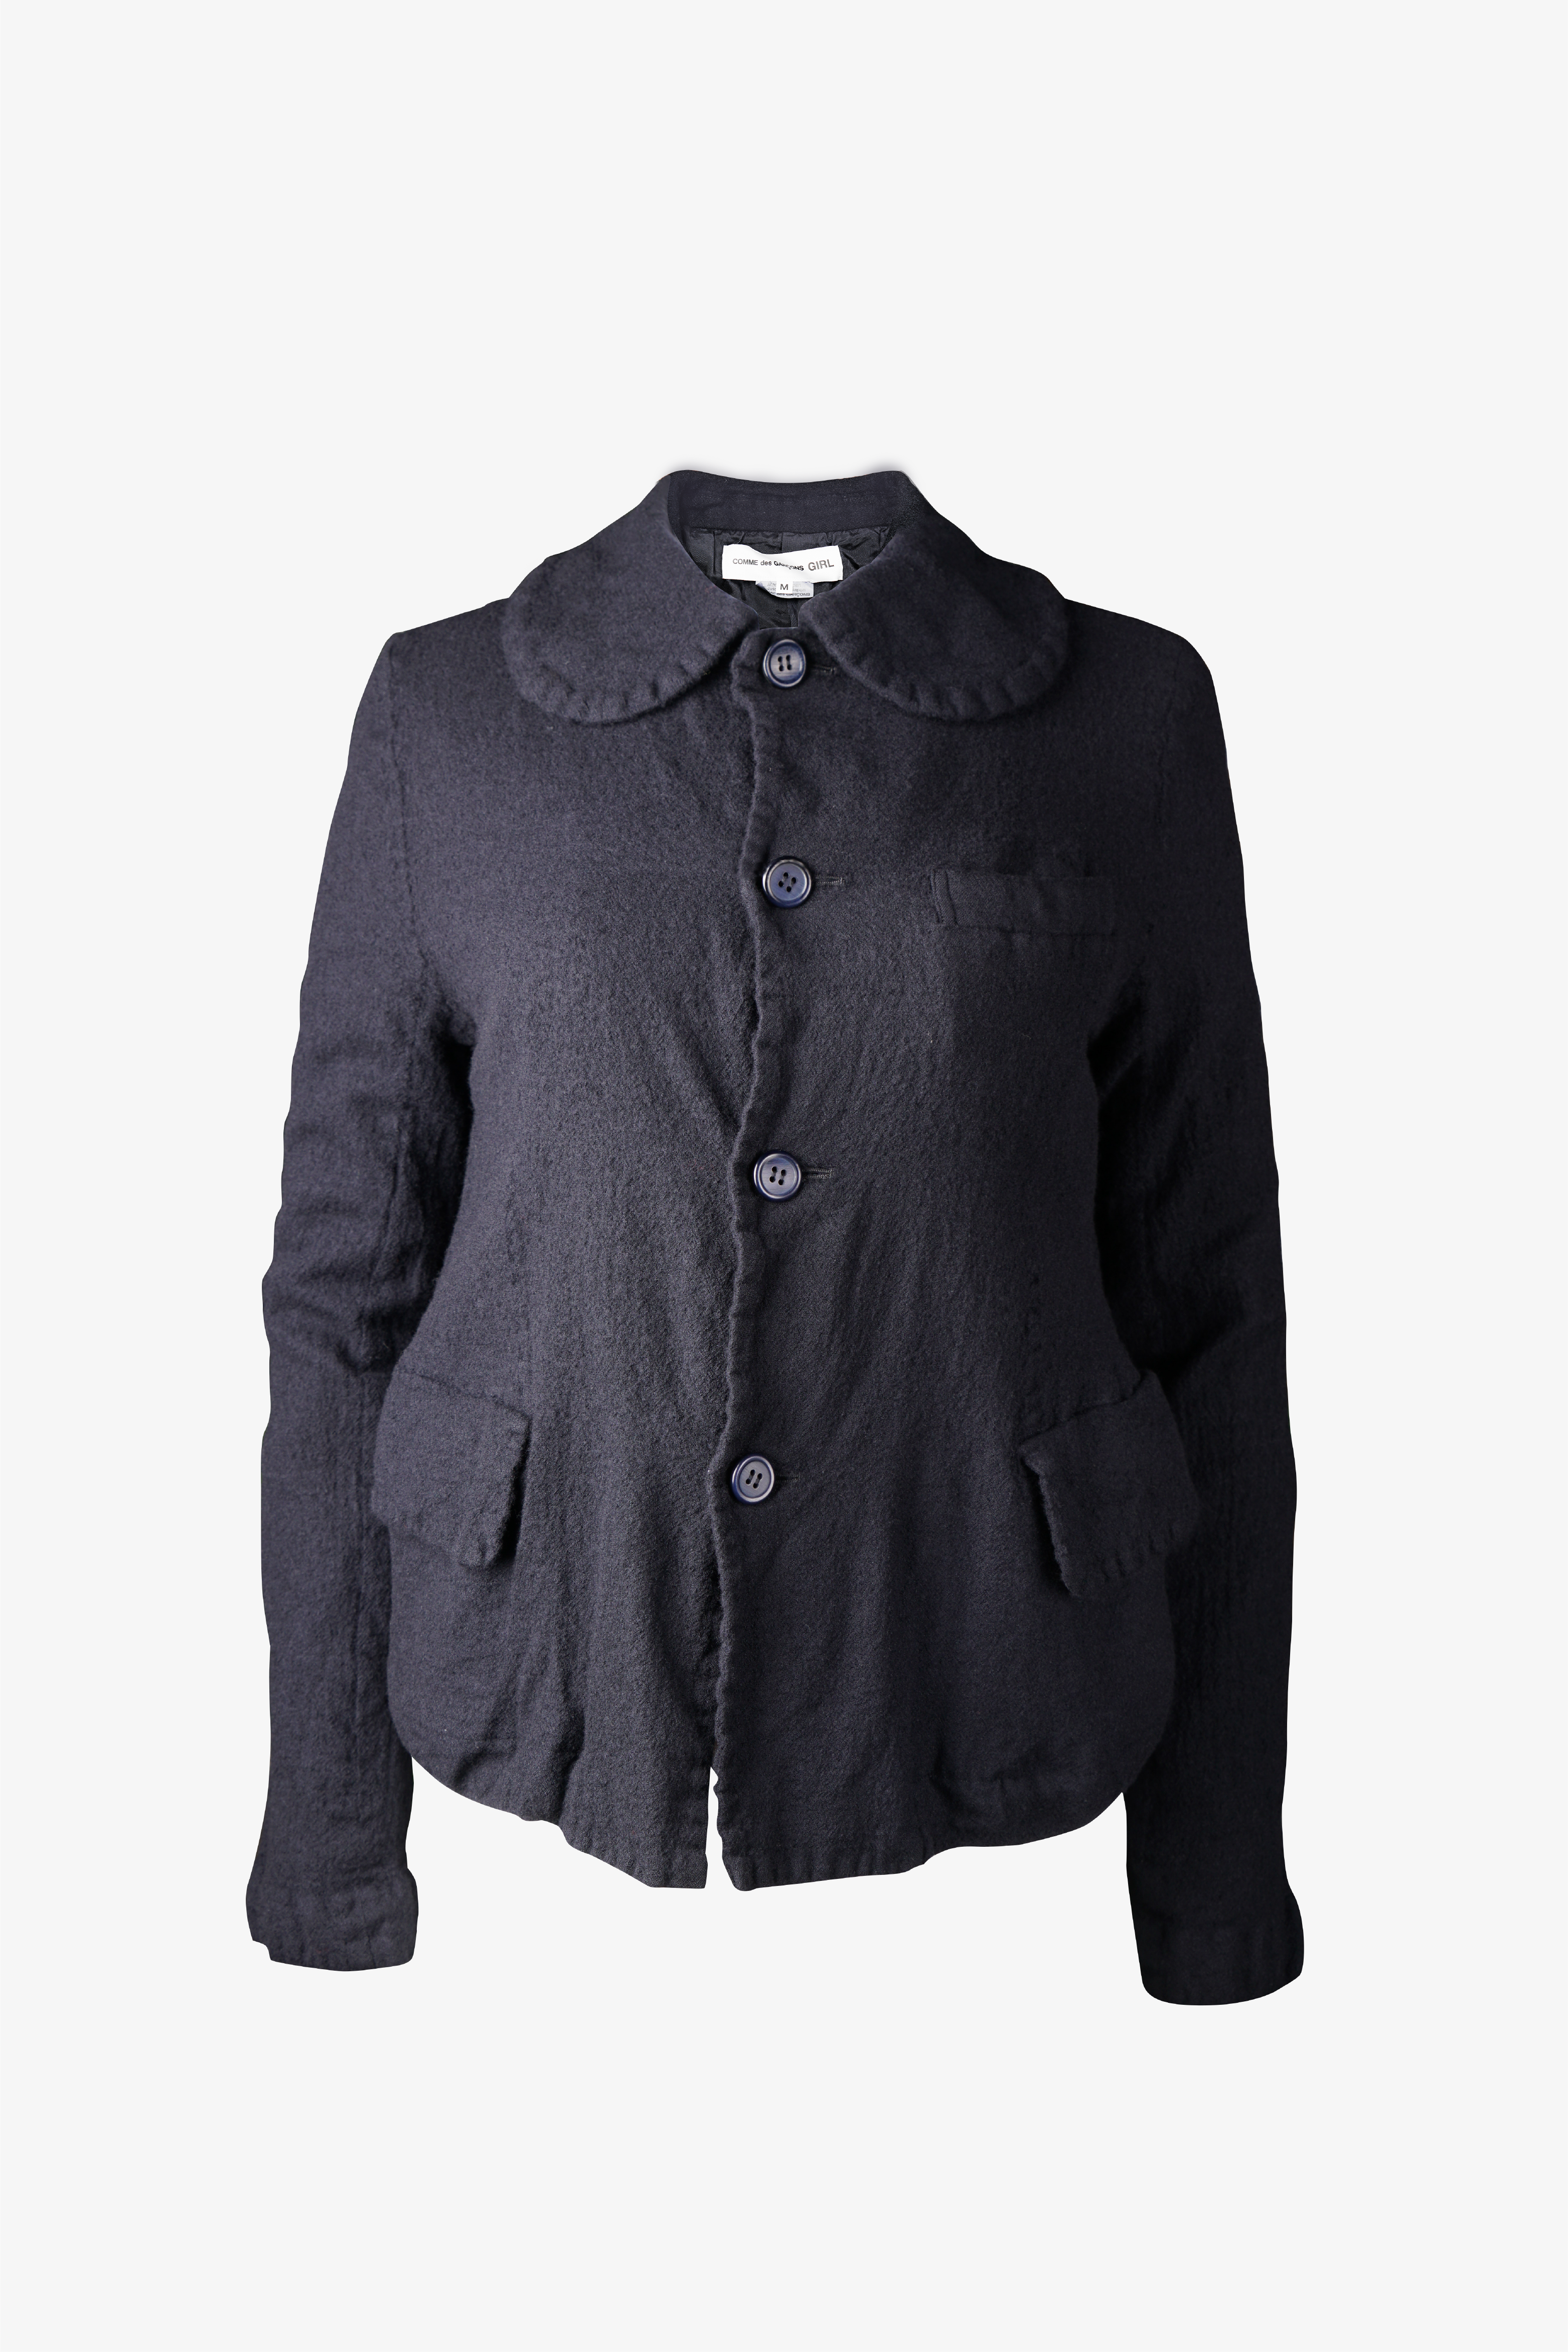 Selectshop FRAME - COMME DES GARCONS GIRL Jacket Outerwear Dubai